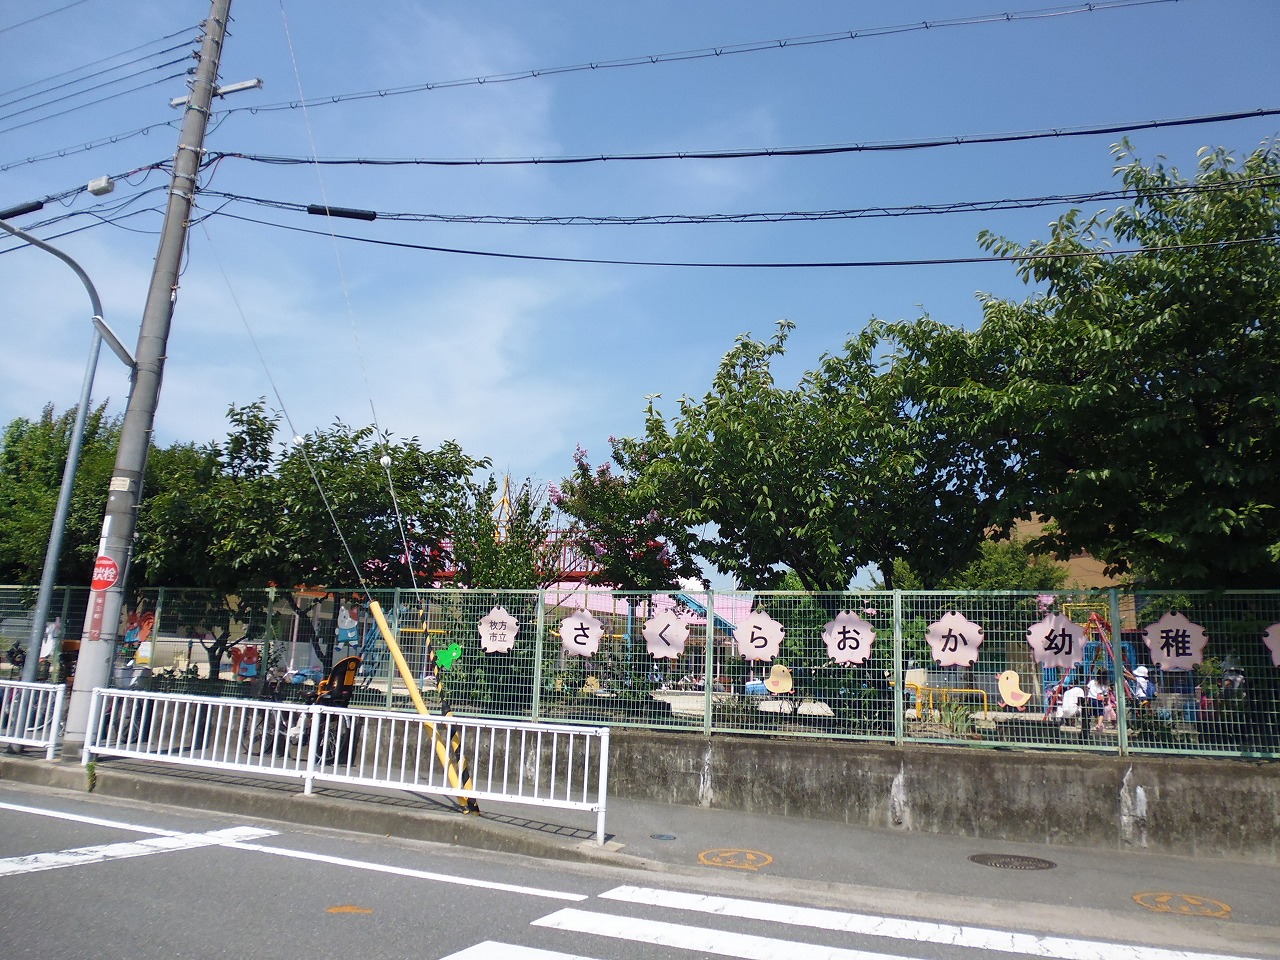 kindergarten ・ Nursery. Hirakata Municipal Sakuragaoka kindergarten (kindergarten ・ 513m to the nursery)